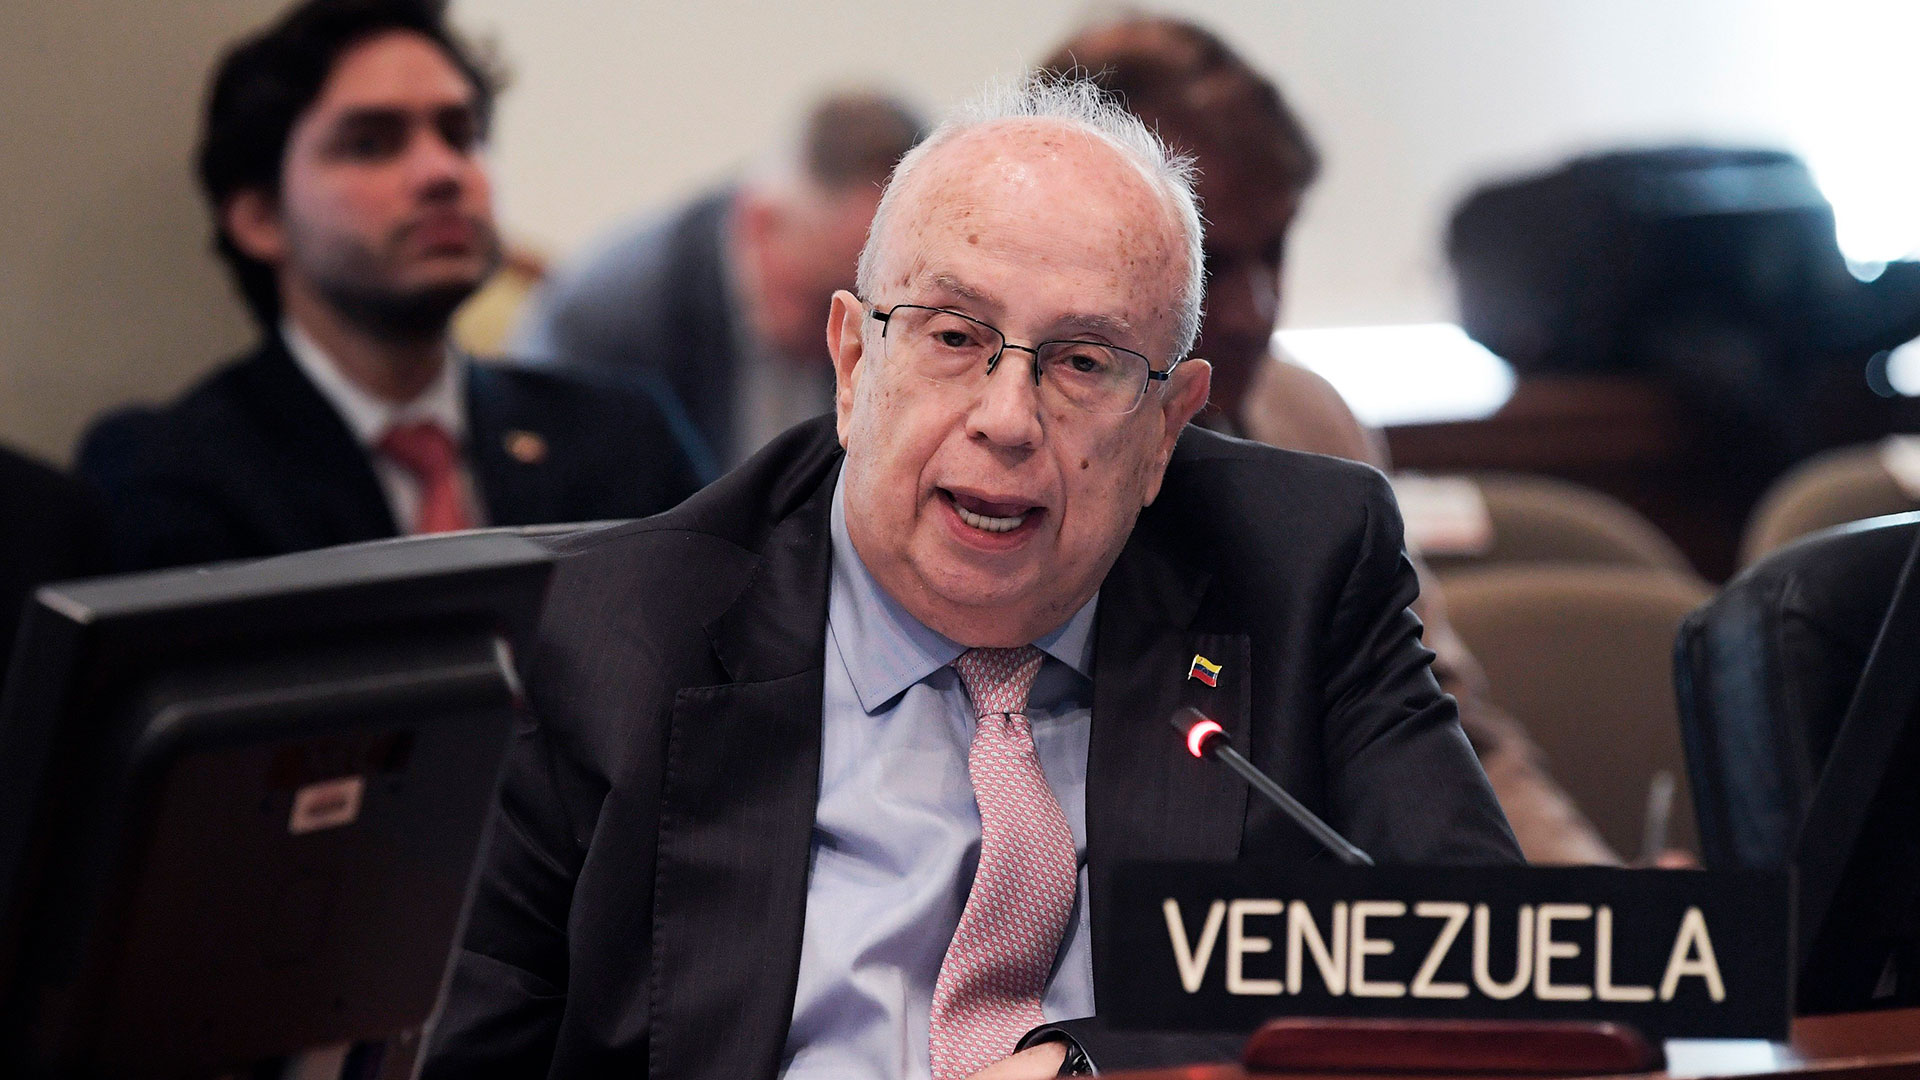 Gustavo Torre, Venezuelan opposition leader Juan Quito's representative to the OAS